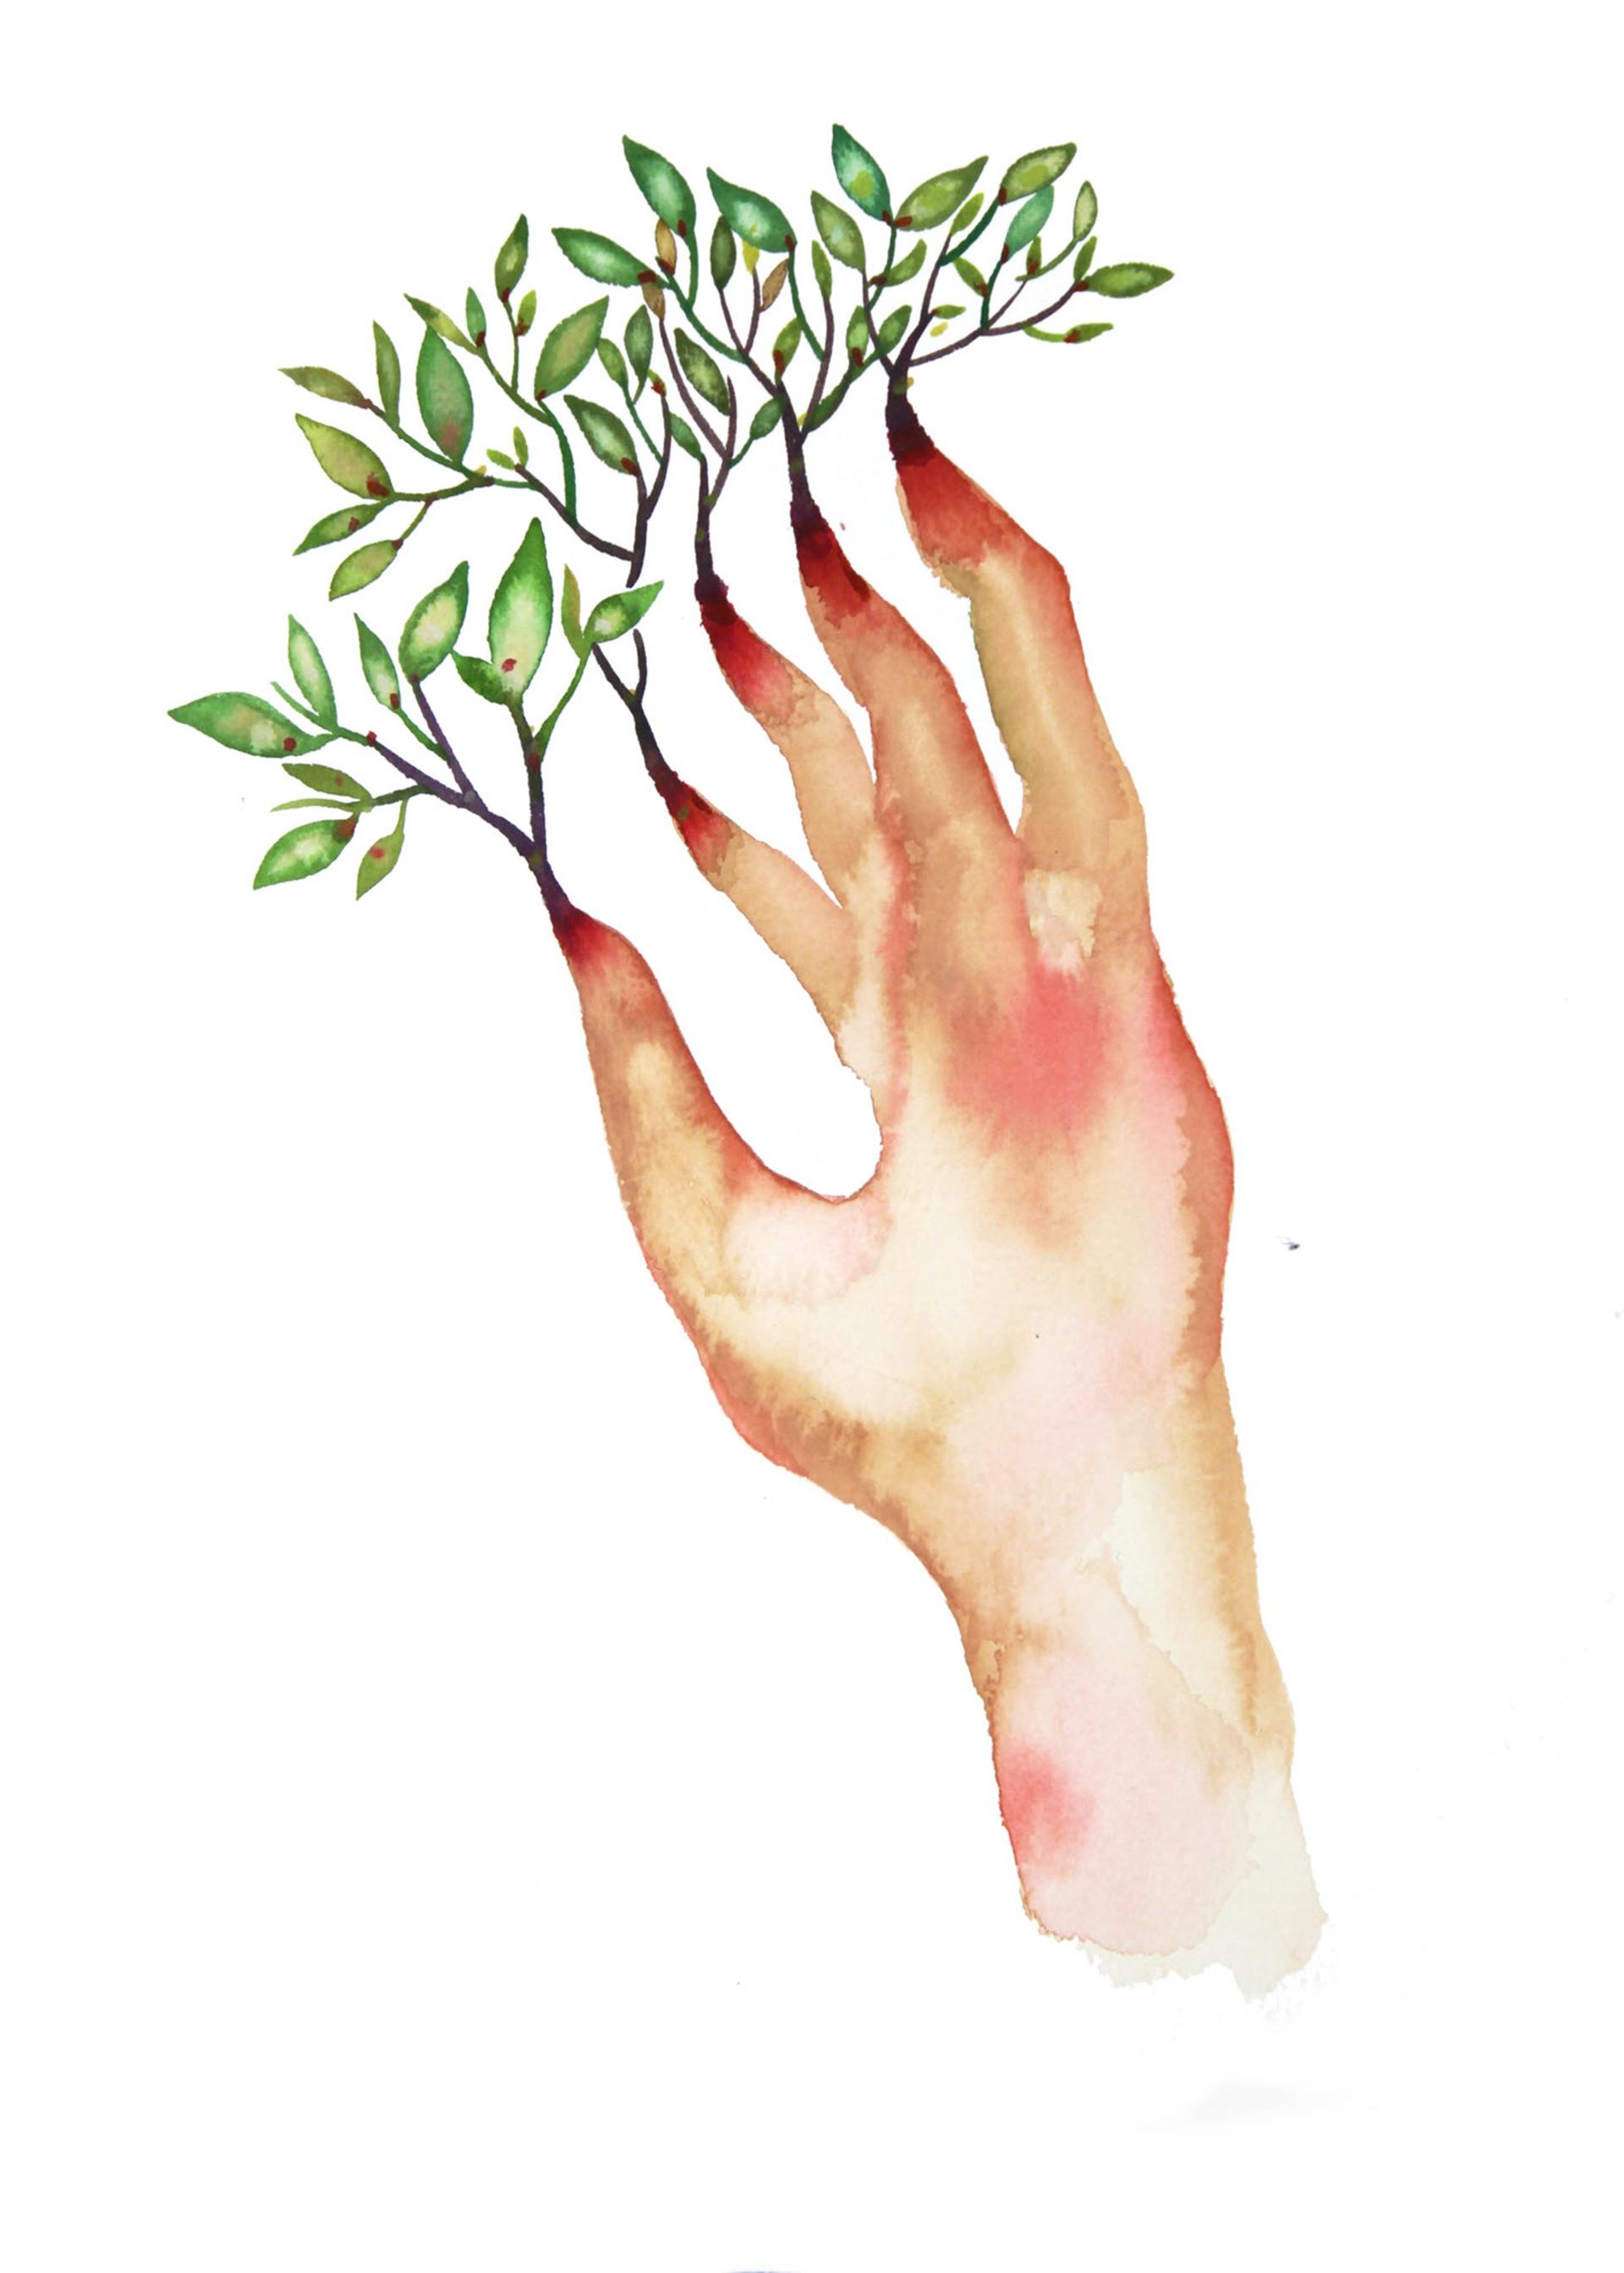 Daphne's green hand